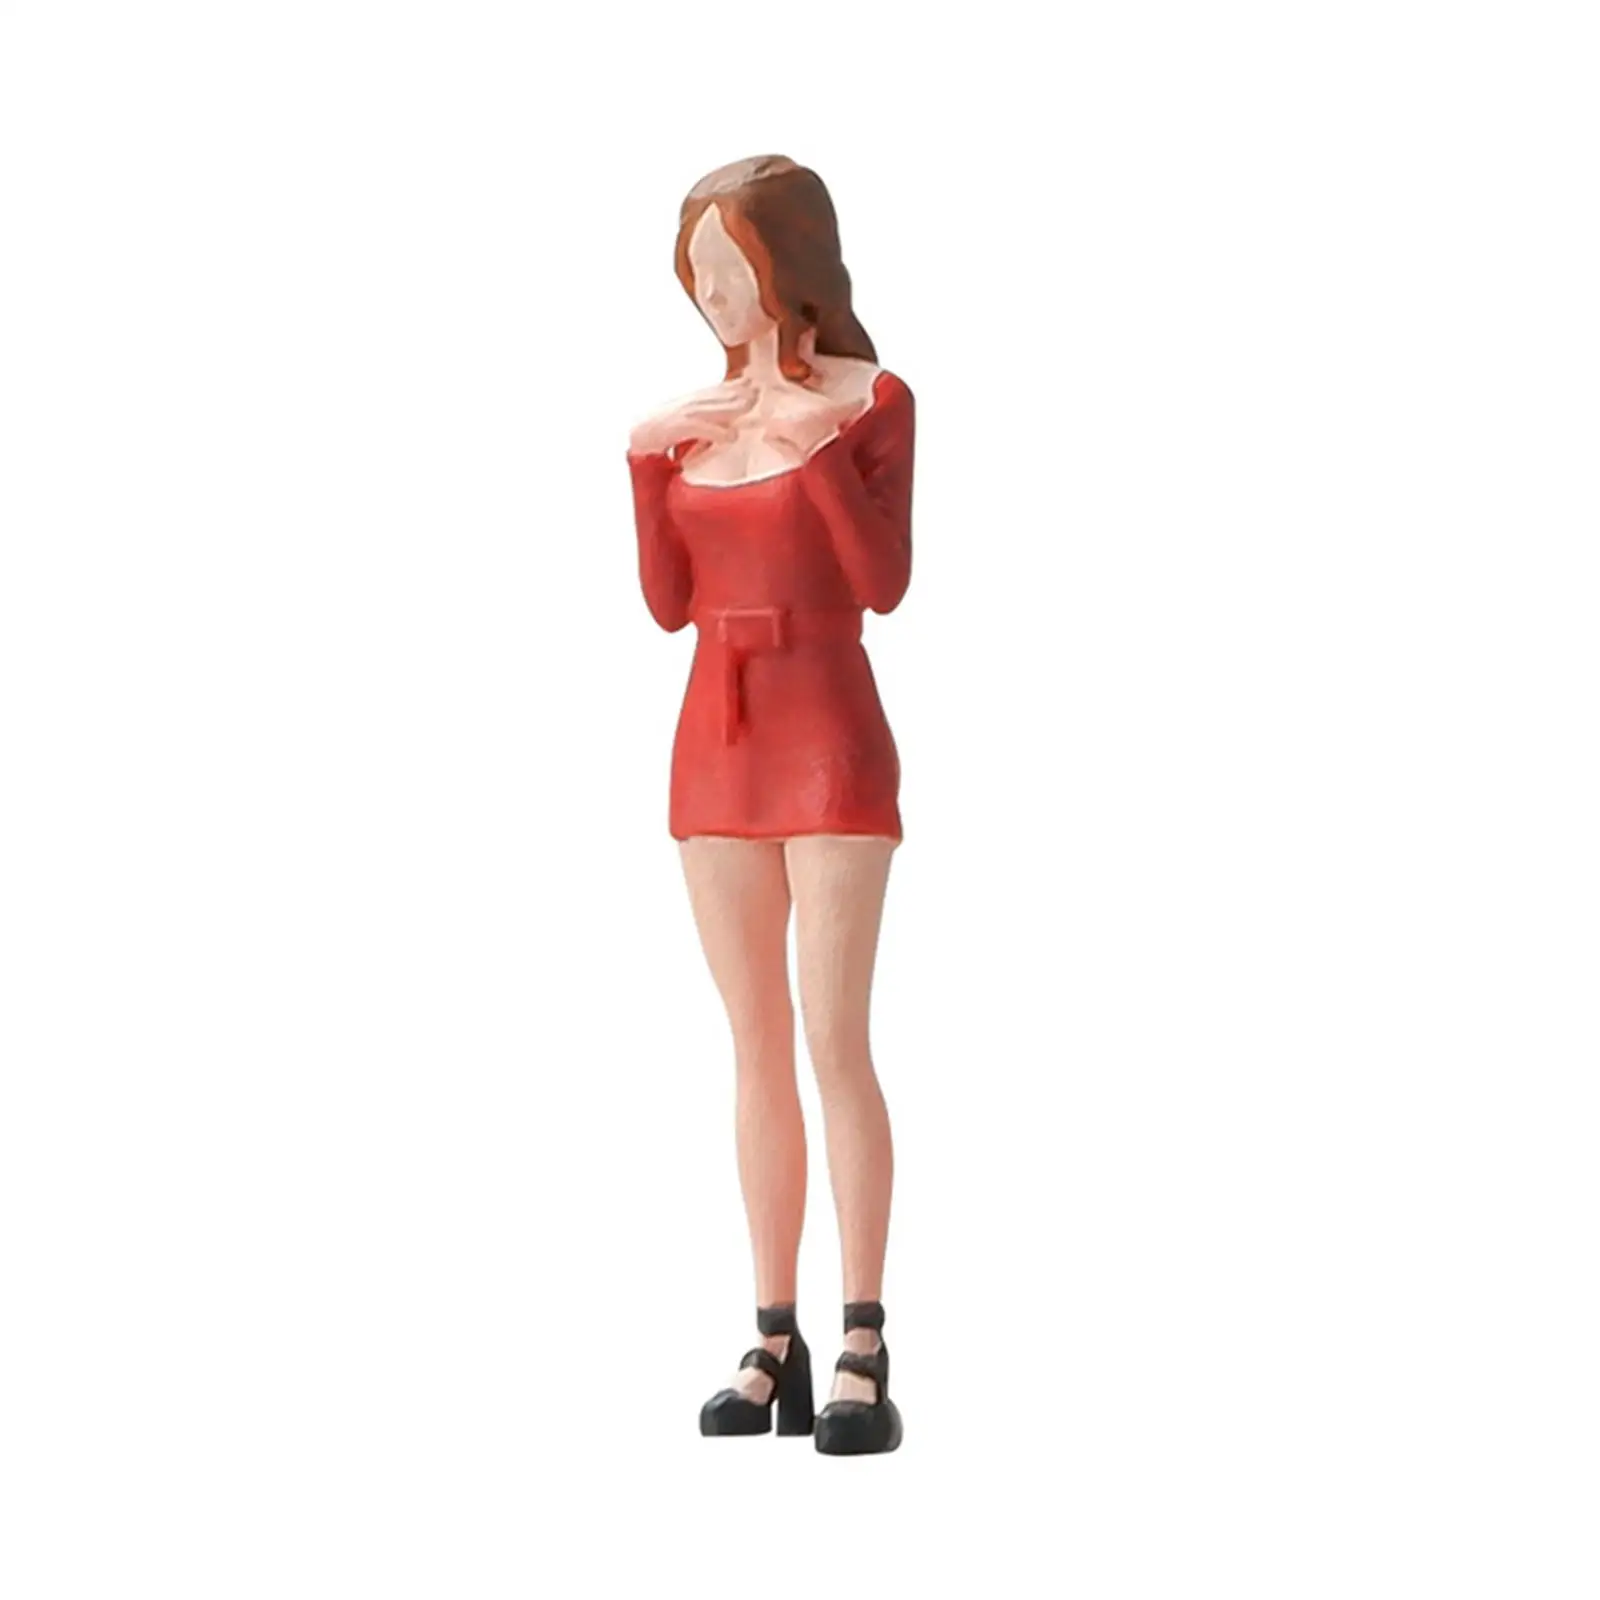 1/64 Hip Skirt Girl Figure Model Fairy Garden DIY Projects Train Railway Collections Layout Movie Props S Gauge Resin Figurine